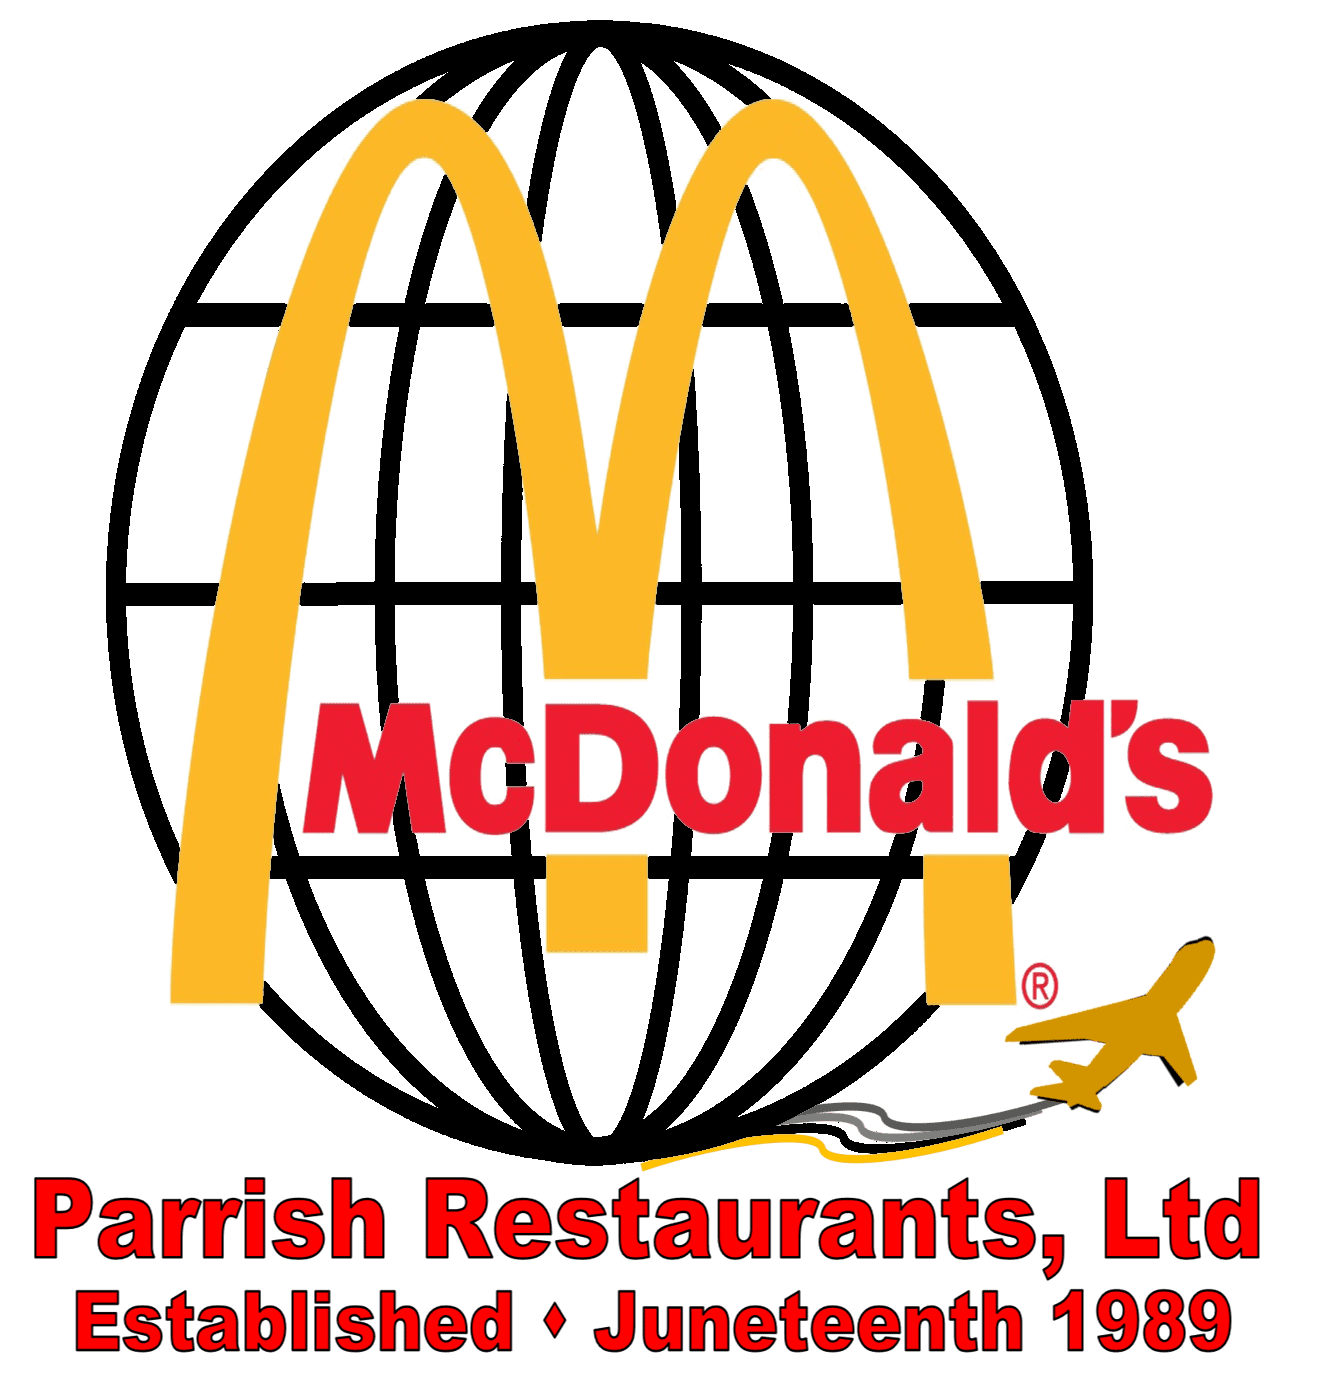 McDonalds/Parrish Restaurants logo